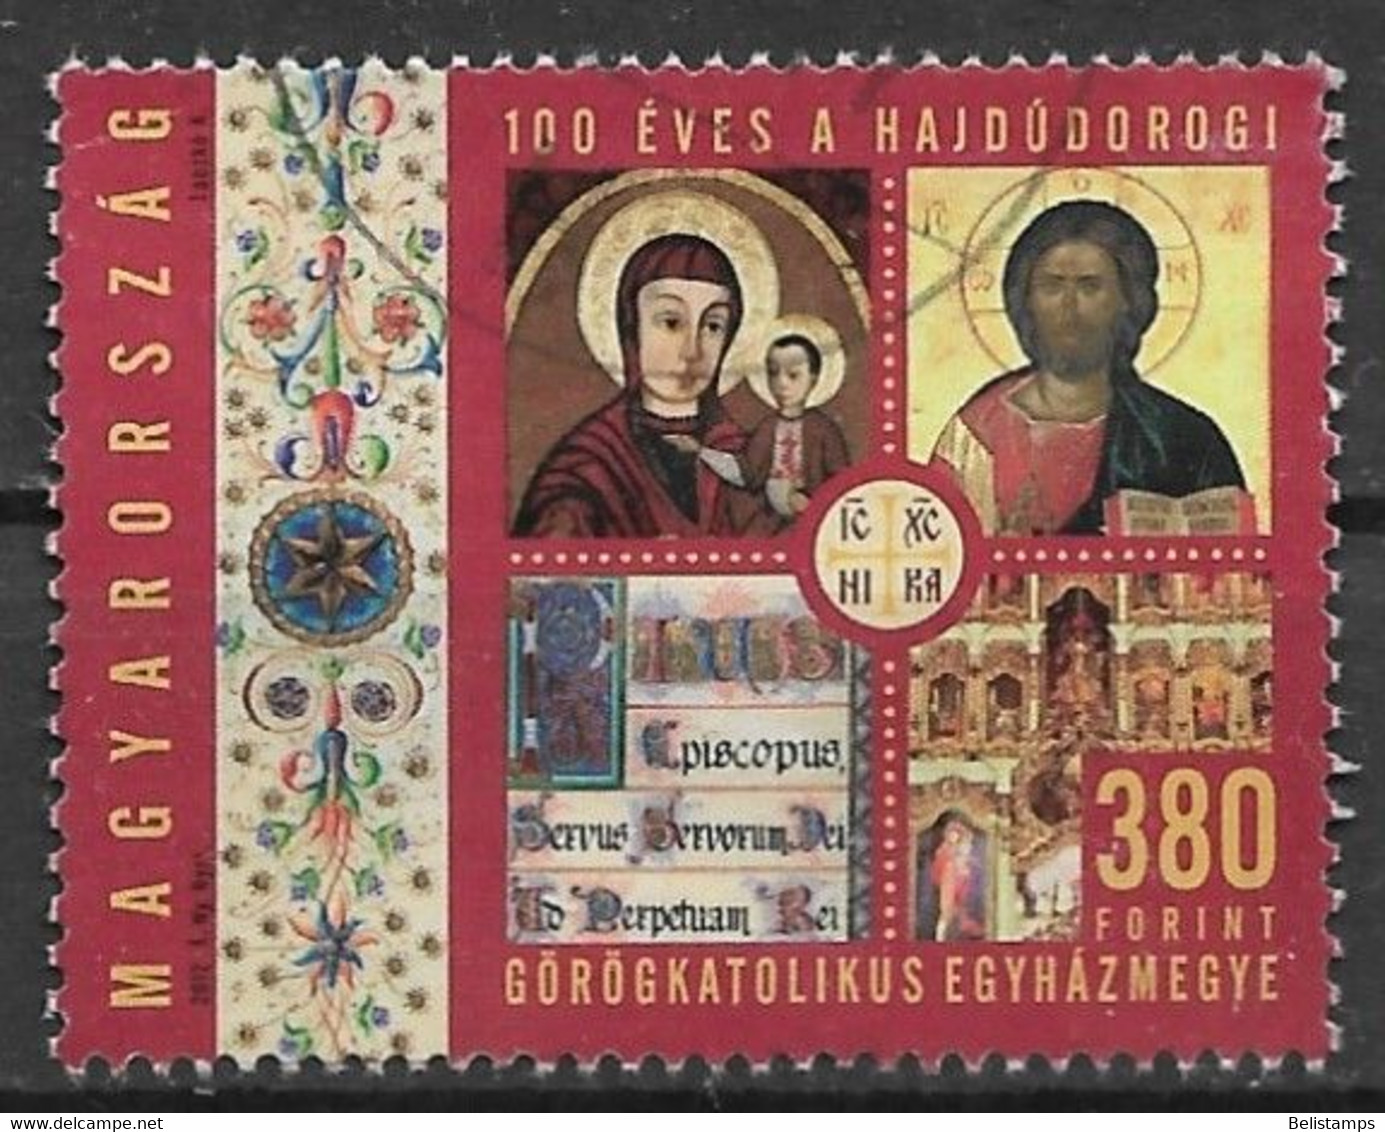 Hungary 2012. Scott #4223 (U) Greek Orthodox Diocese Of Hajdudorog, Cent  *Complete Issue* - Usado